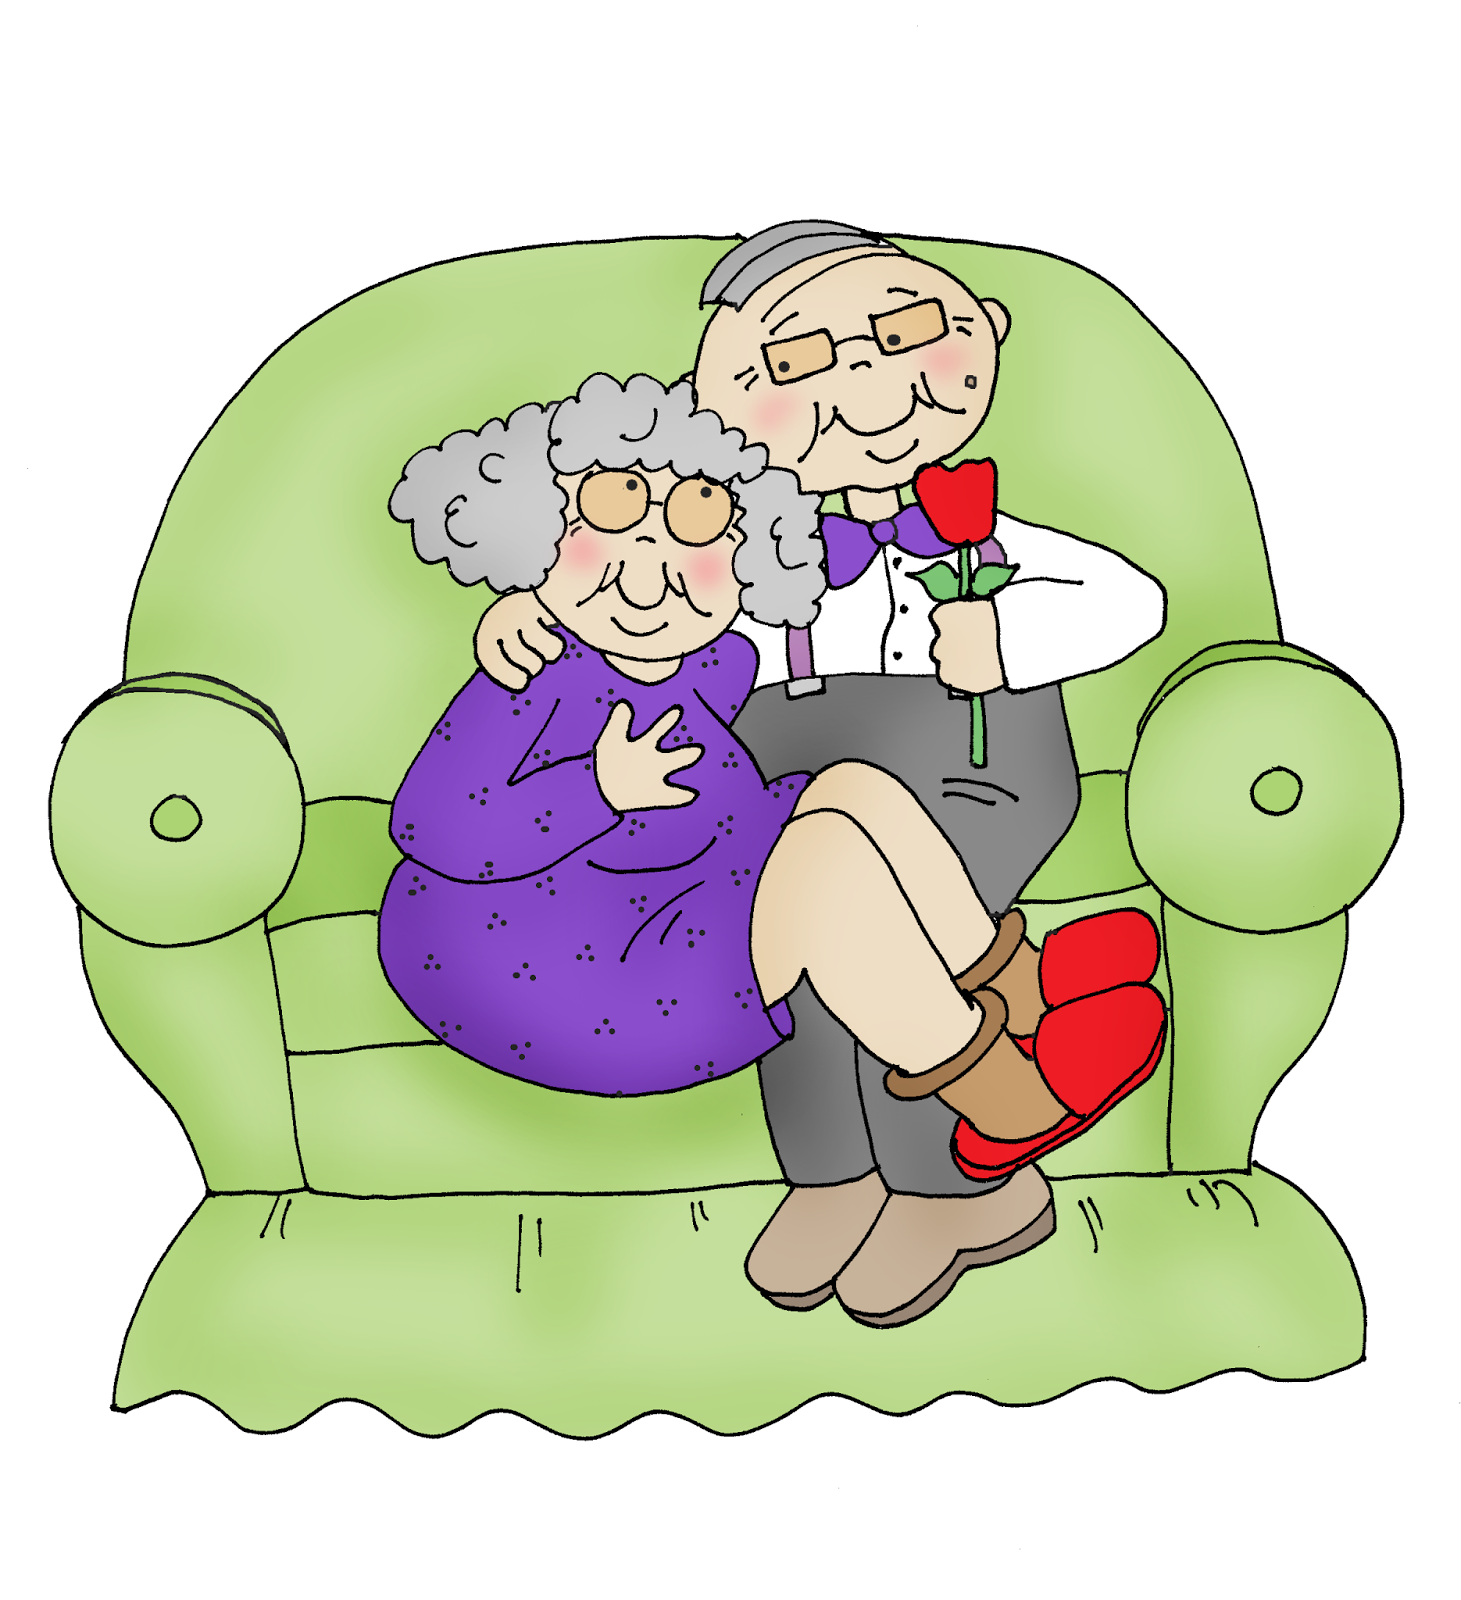 С днем рождения бабушке смешные. Бабушка и дедушка рисунок. Открытка для бабушки и дедушки. Бабуля и дедуля рисунок. Бабушка картинка.